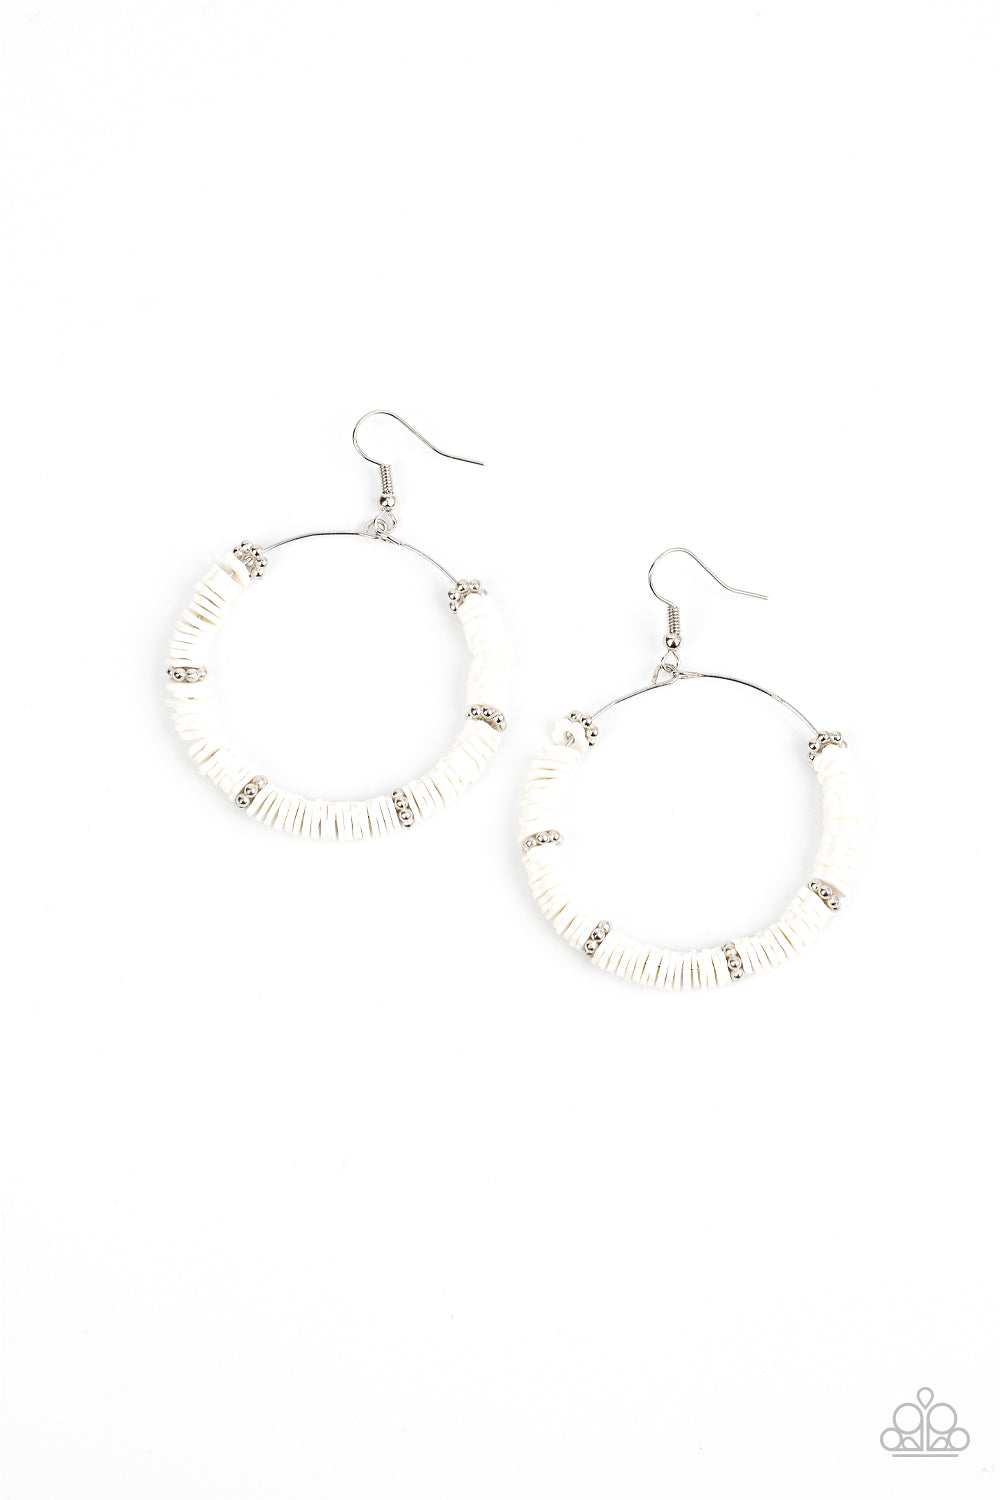 Loudly Layered - White hoop earrings